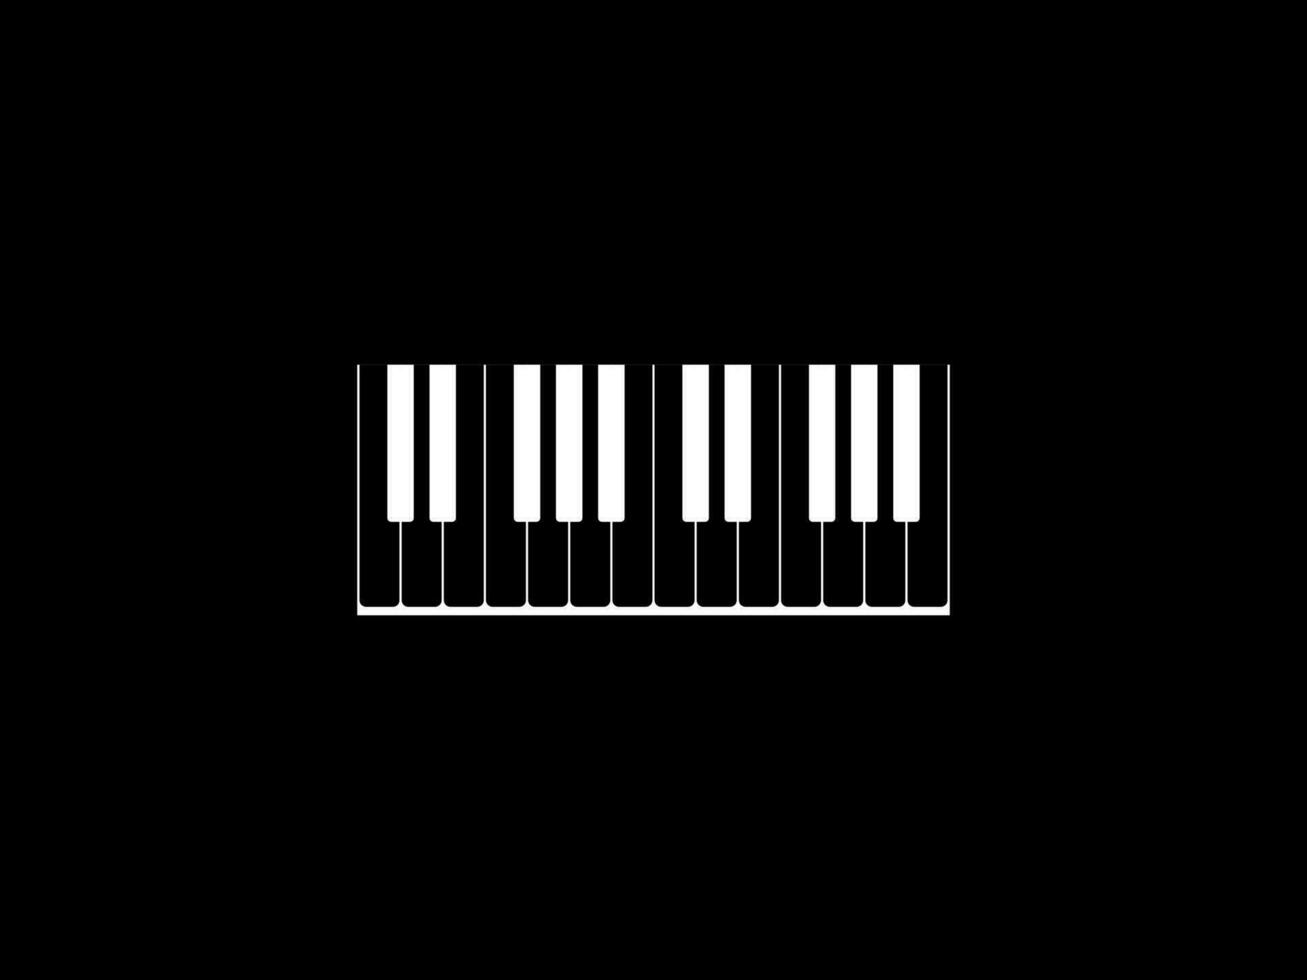 Piano Keyboard Silhouette, can use for Art Illustration, Logo Gram, Pictogram, Website, or Graphic Design Element. Vector Illustration